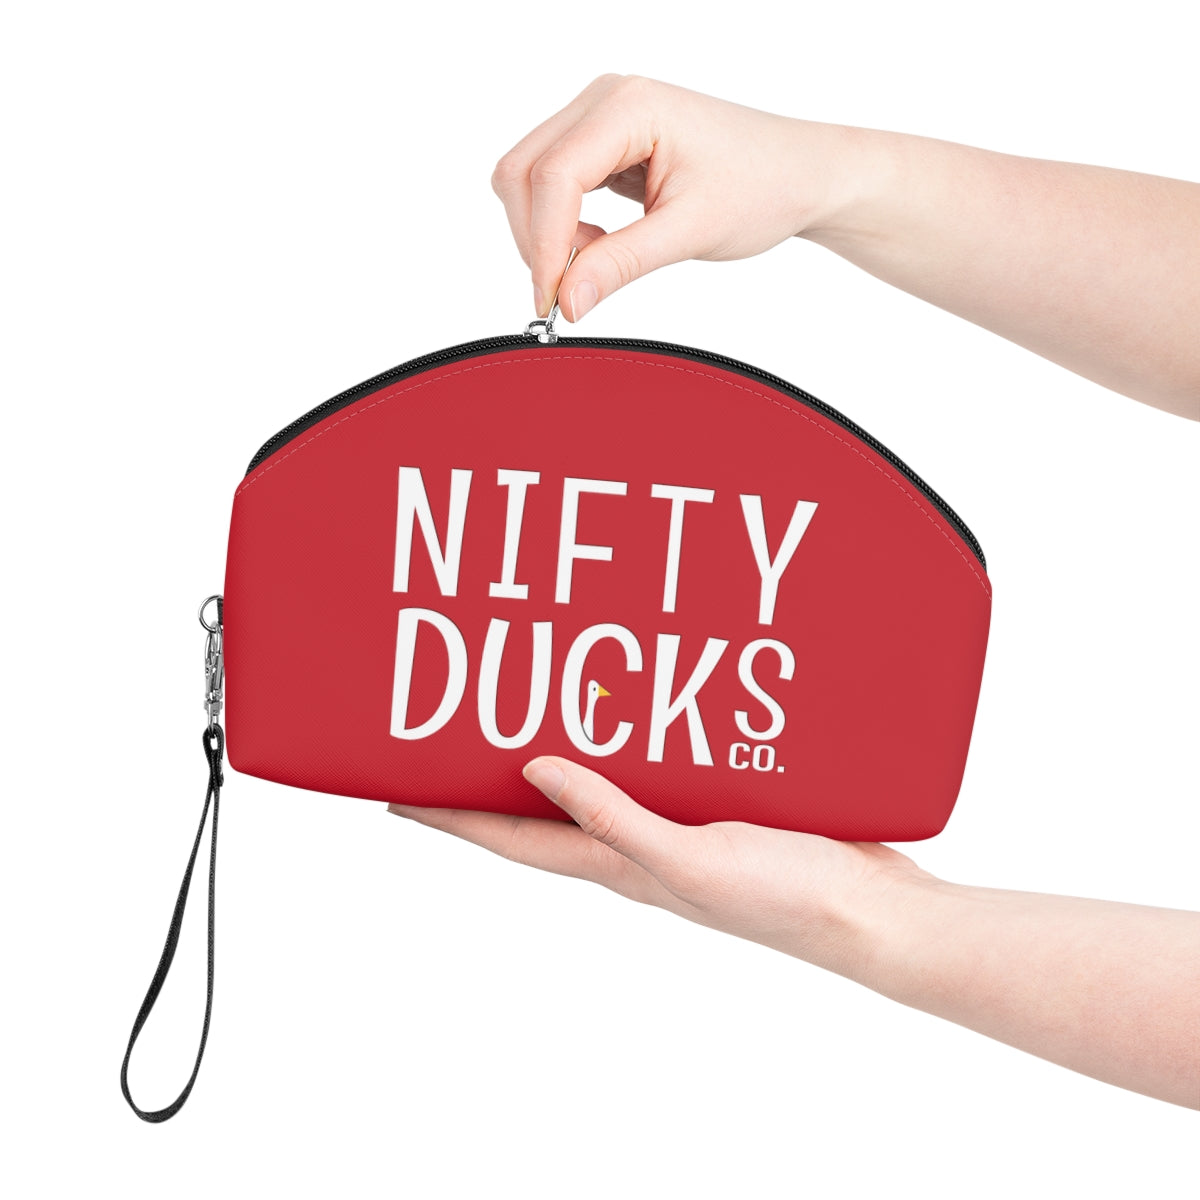 Nifty Ducks Co. Logo2 - red - Makeup Bag